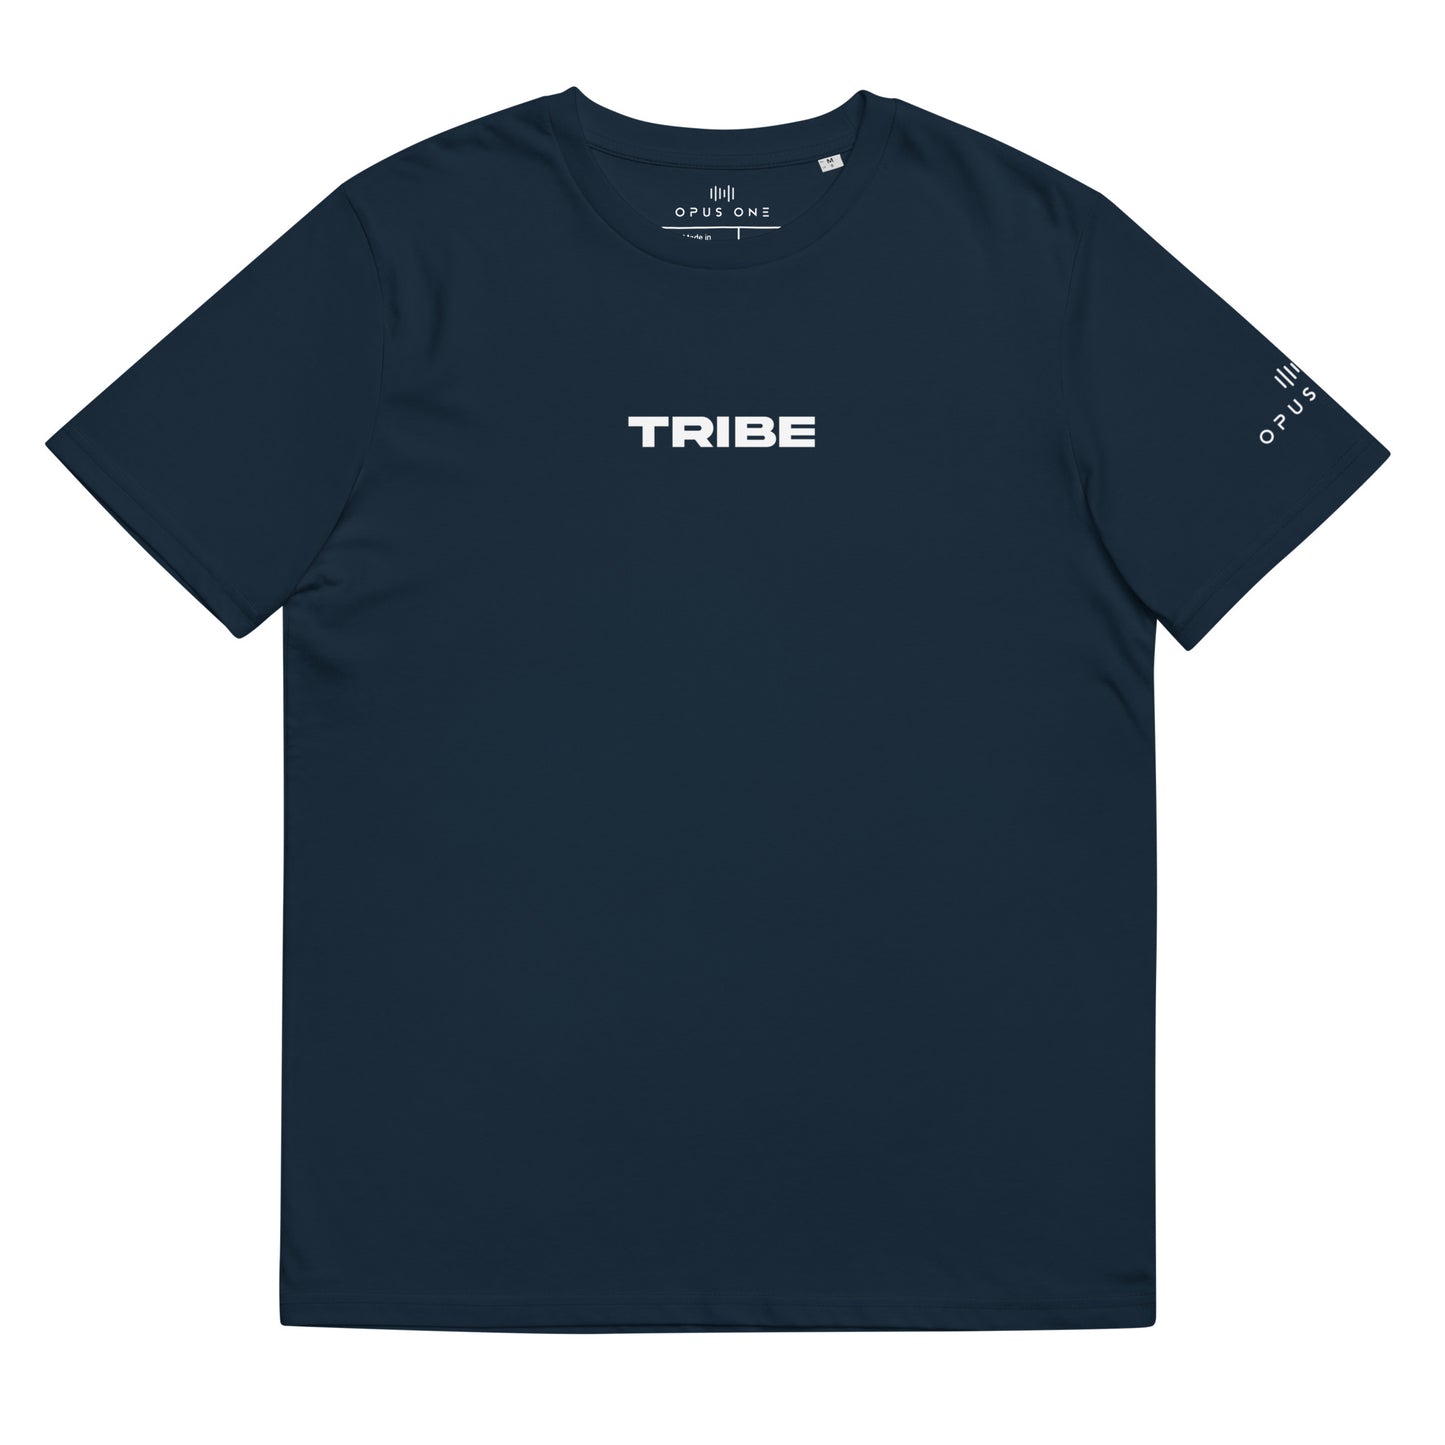 Tribe (v14) Unisex organic cotton t-shirt (White Text)